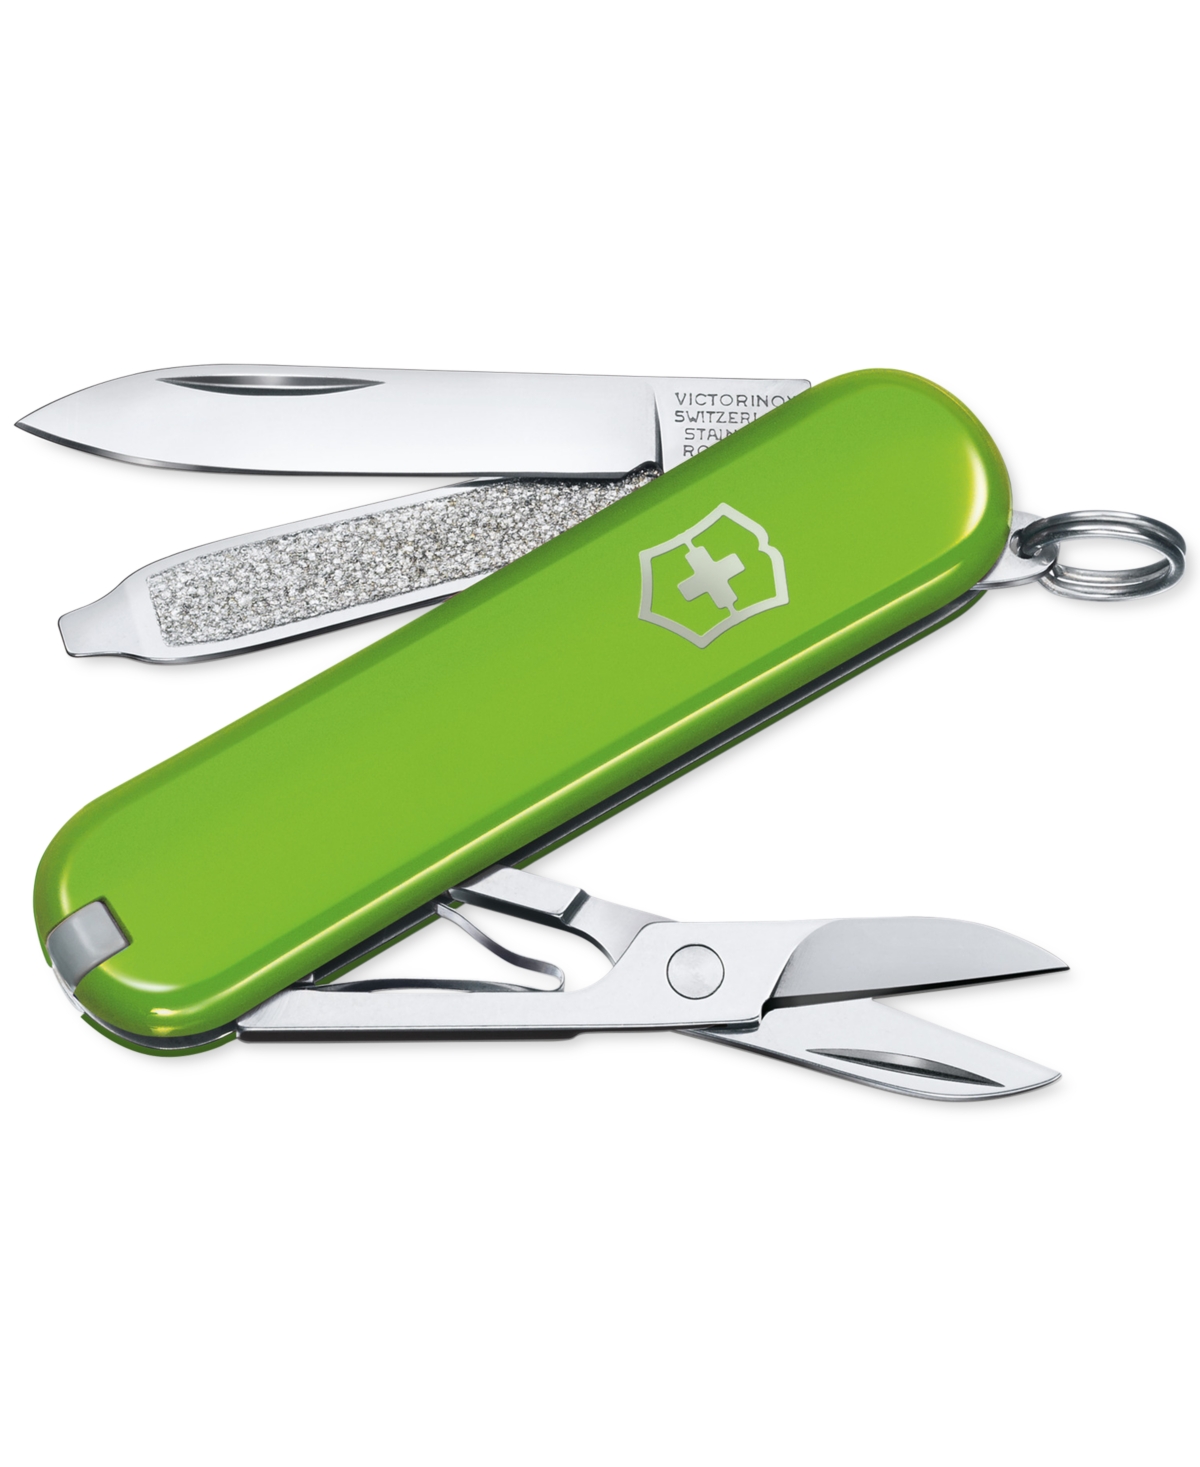 Victorinox Swiss Army Classic Sd Pocketknife, Smashed Avocado In Green